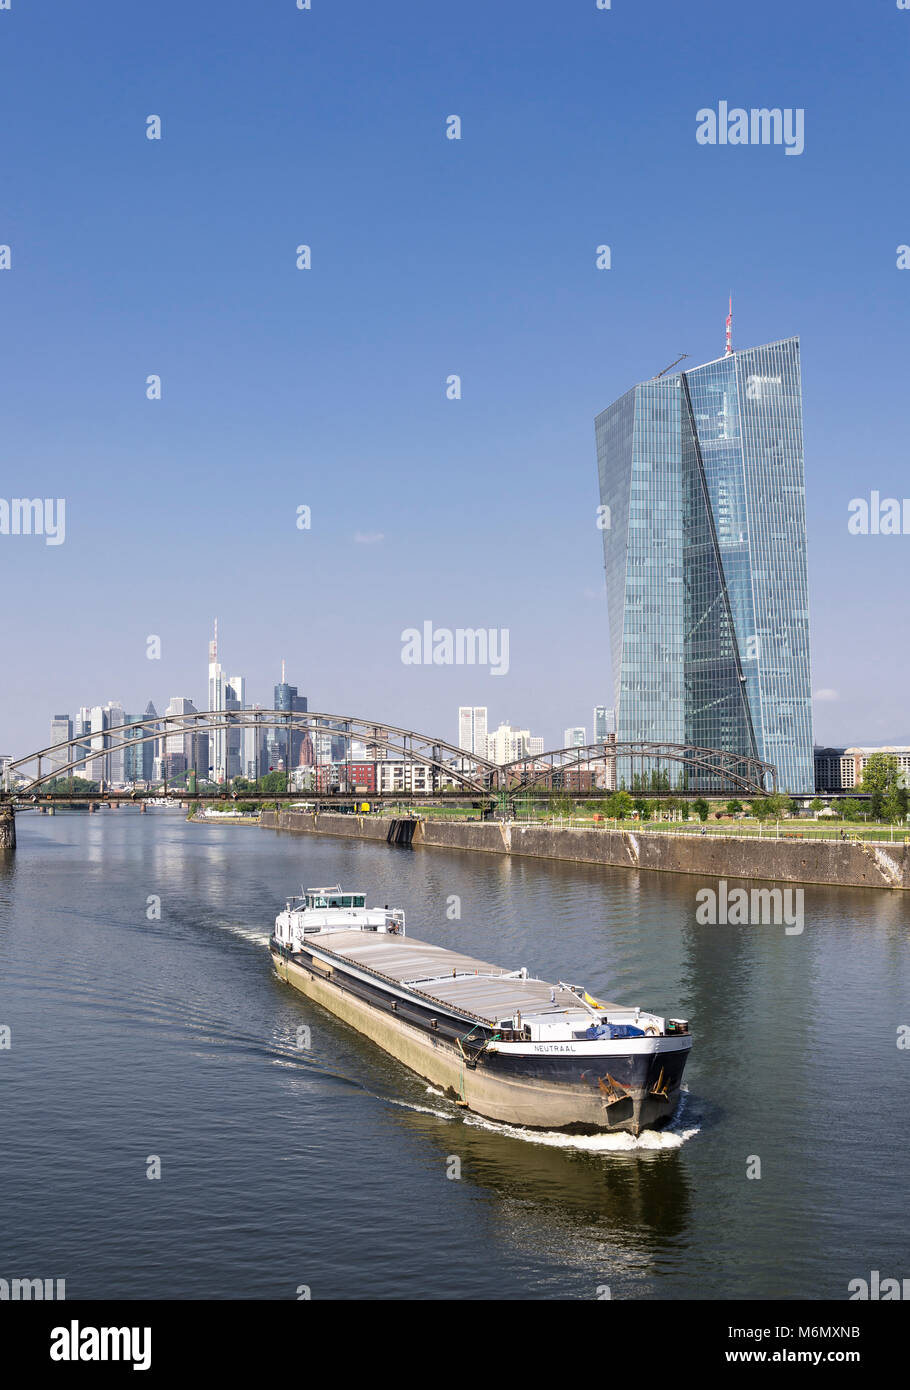 EZB, Europäische Zentralbank, Frankfurt, Hessen, Deutschland, Europa Stockfoto